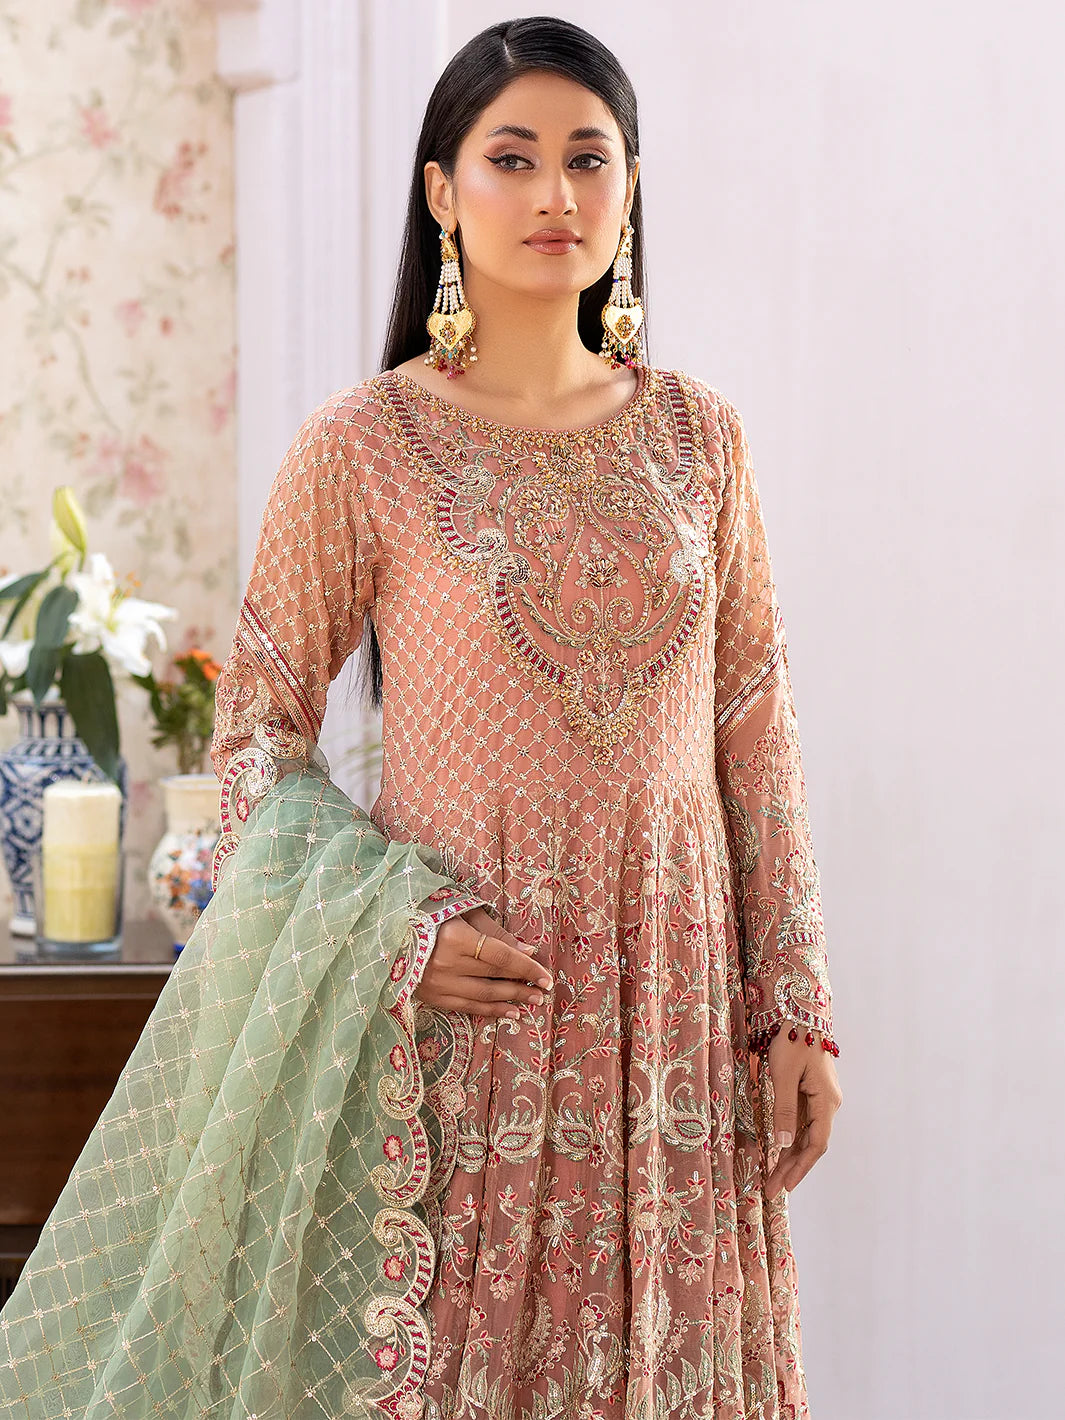 Shah Jahan Embroidered 3 Piece Wedding Gharara Outfit SJ24011 Pink - Desi Posh